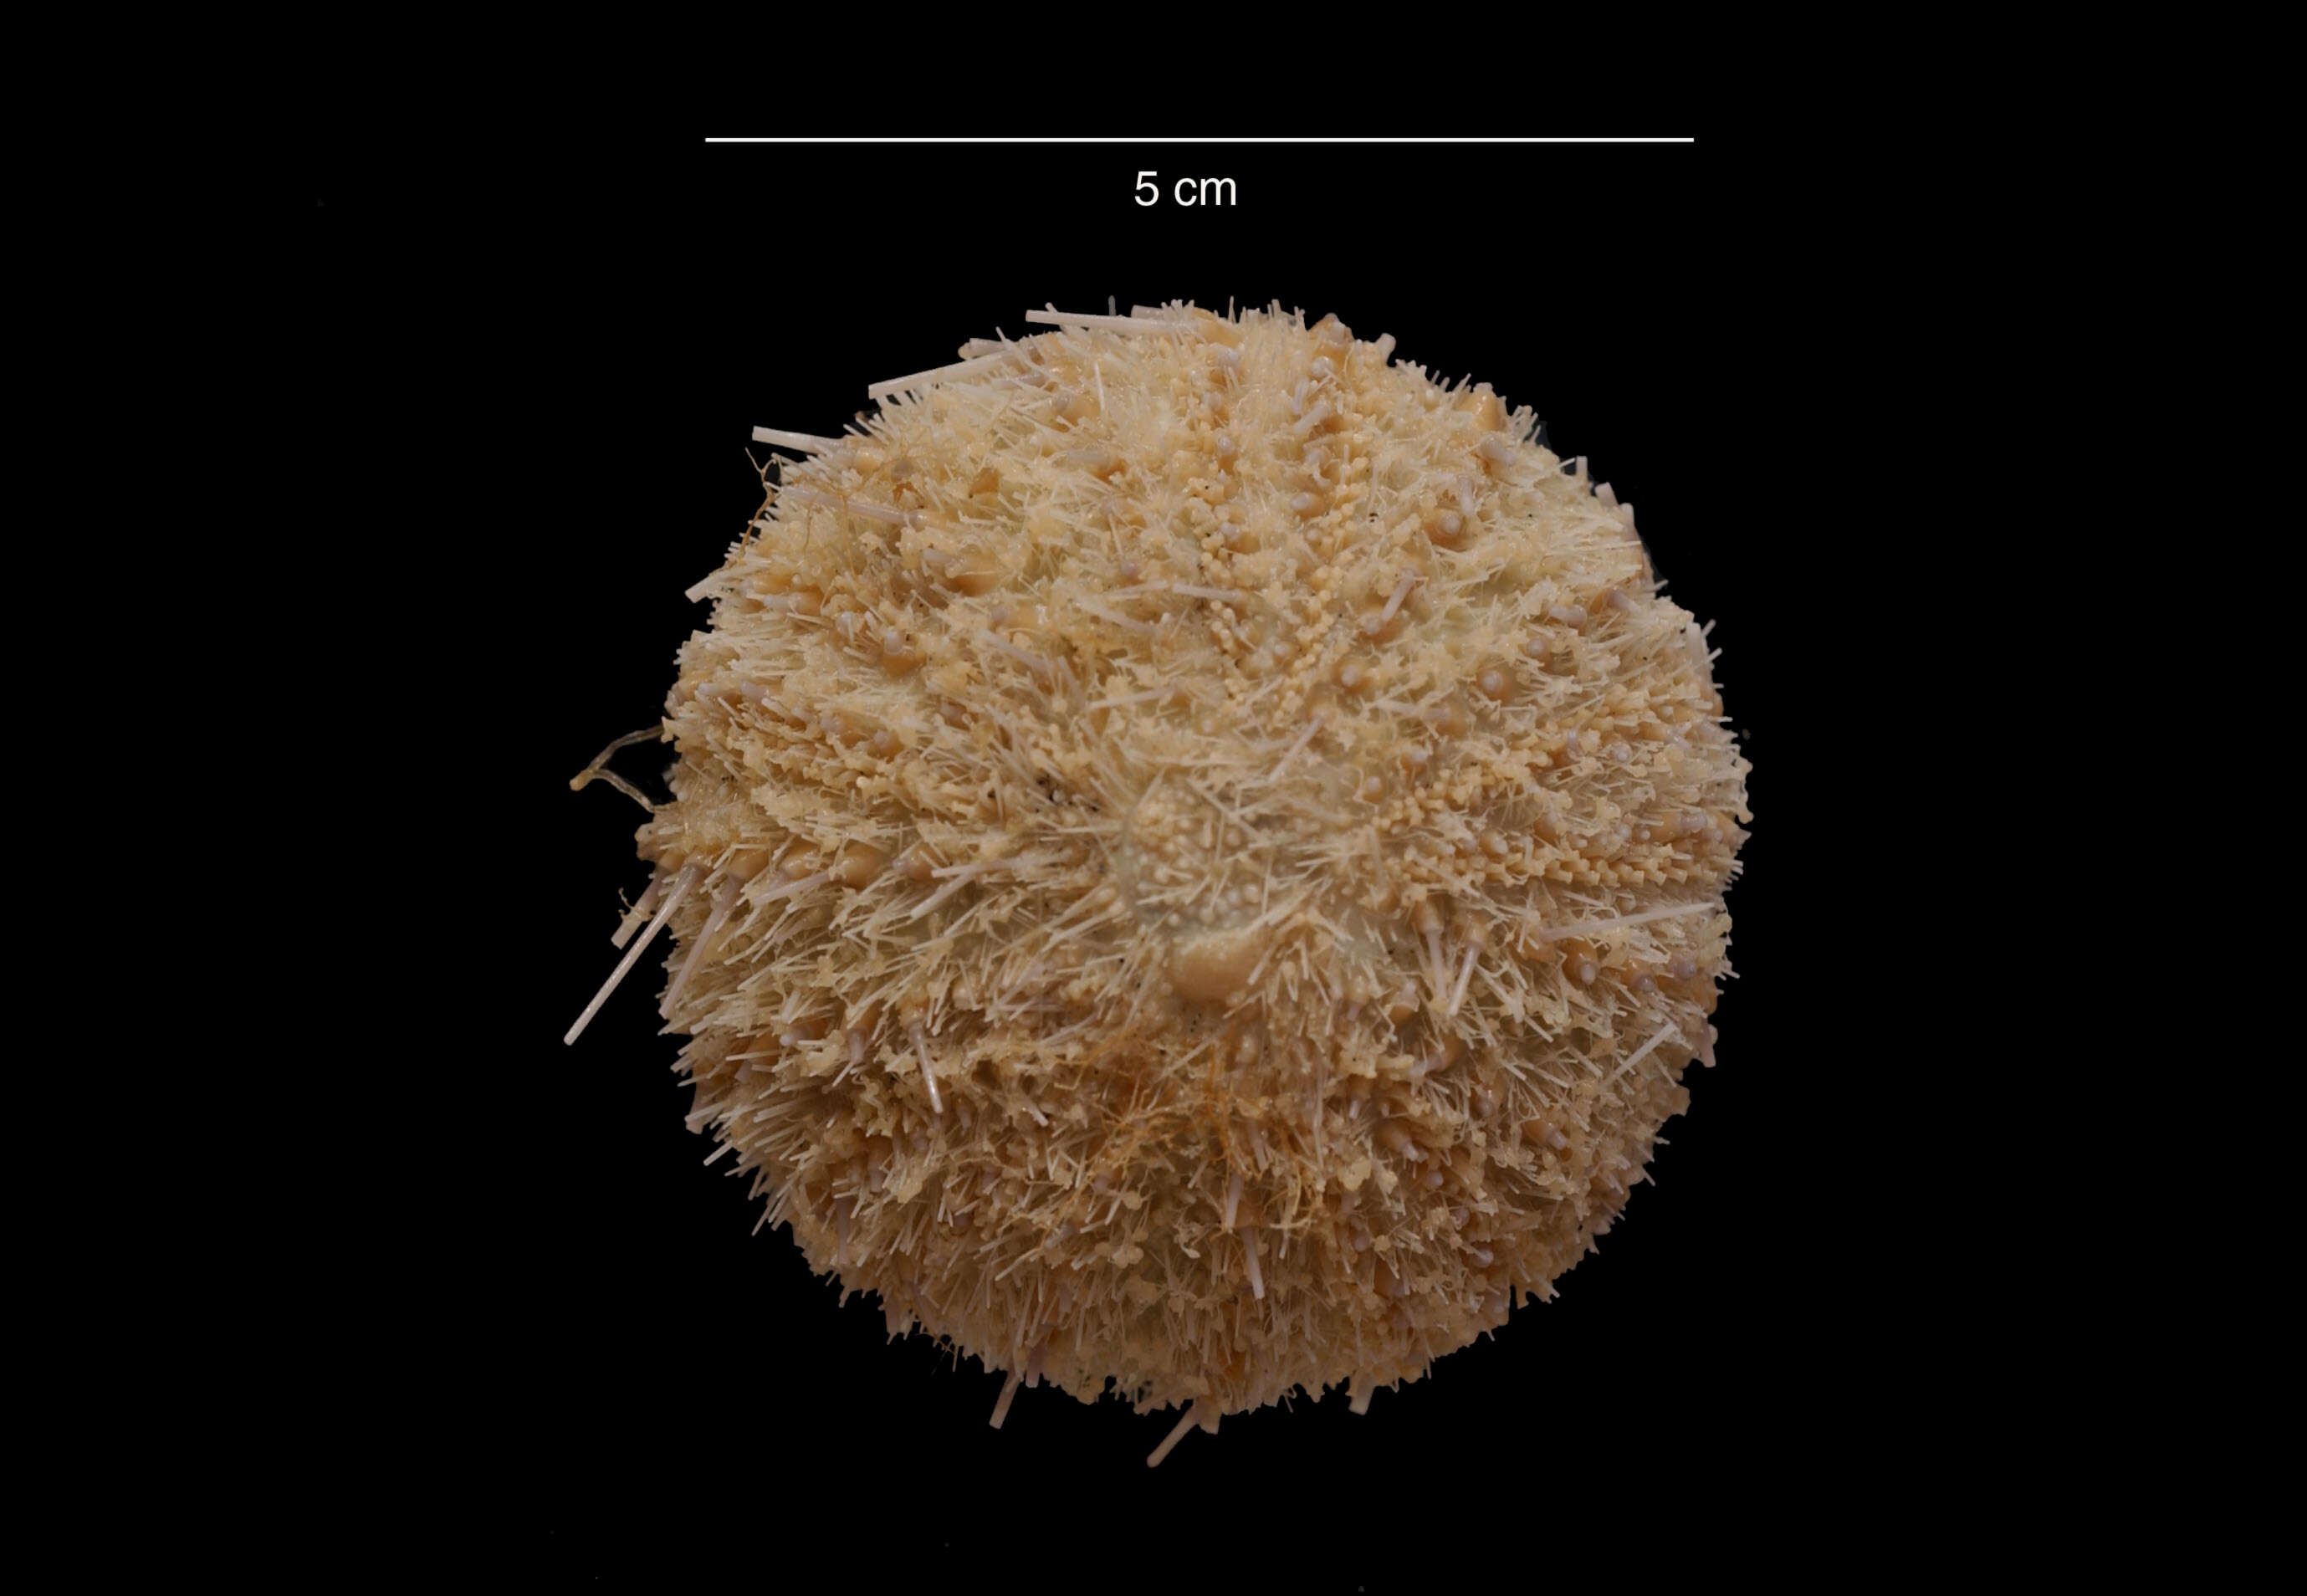 Image of Antarctic sea urchin